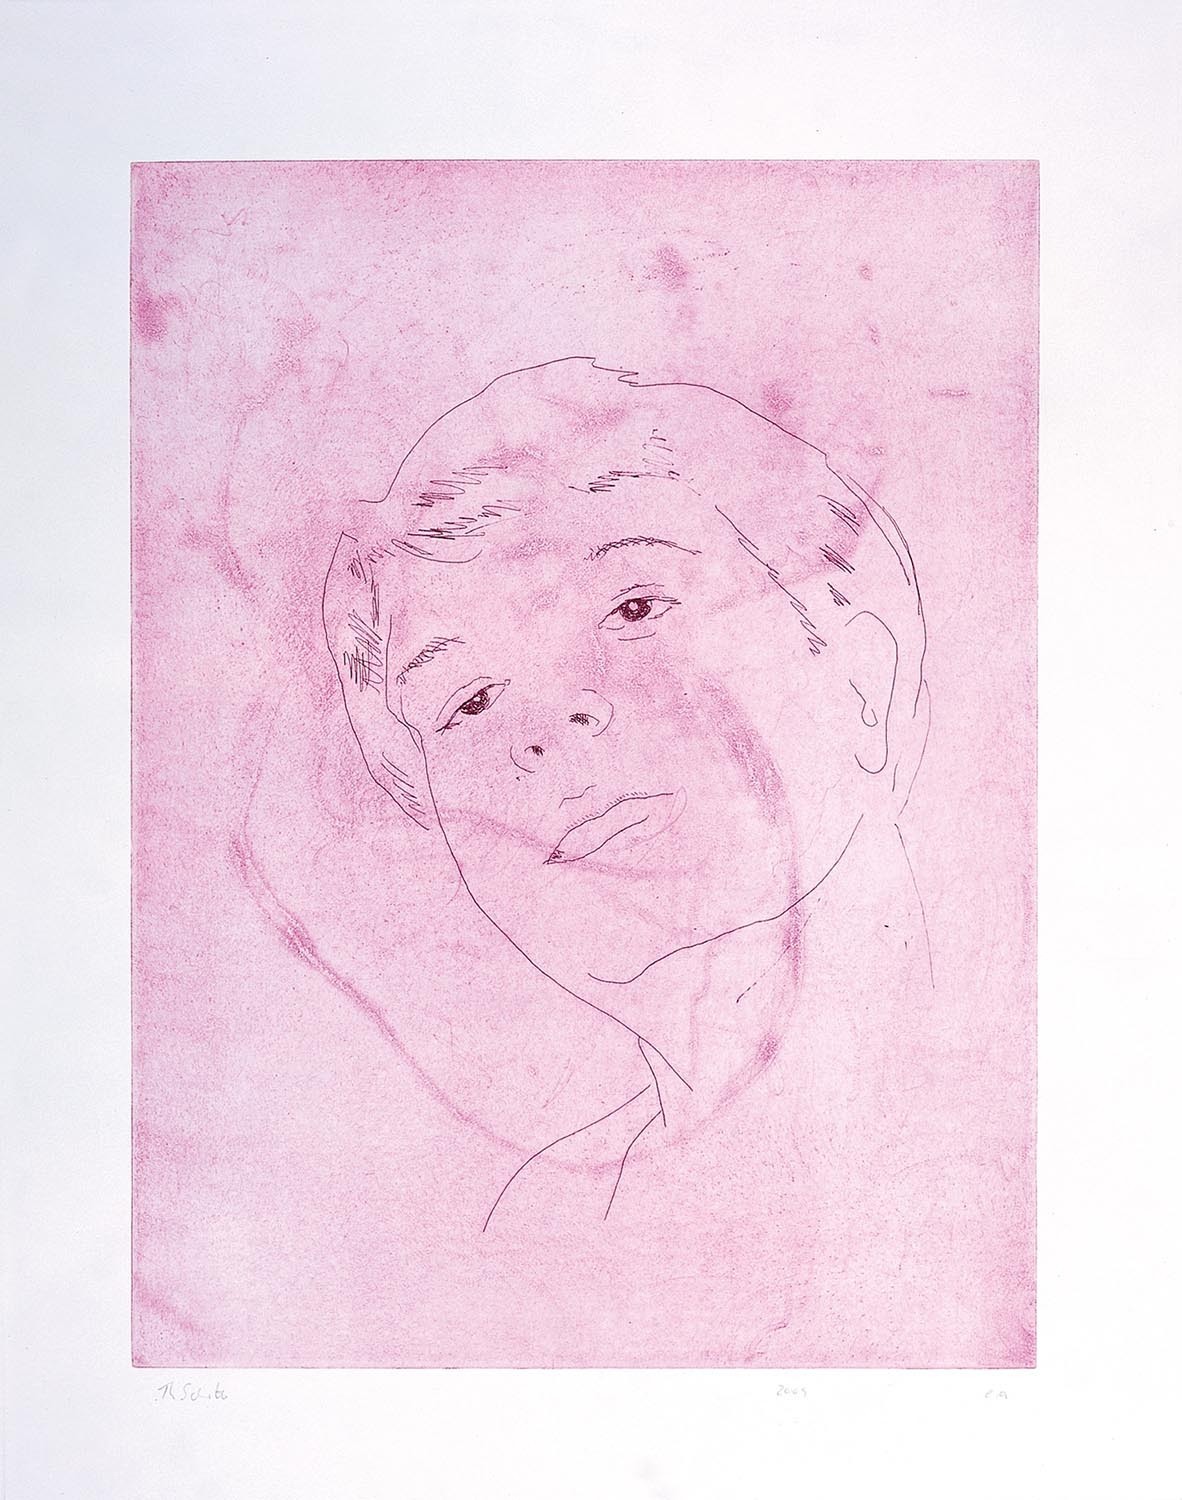 Thomas Schütte, 12 portraits, 2009, drypoint, half-tone and carborundum printed on coloured ground, 90 x 70 cm